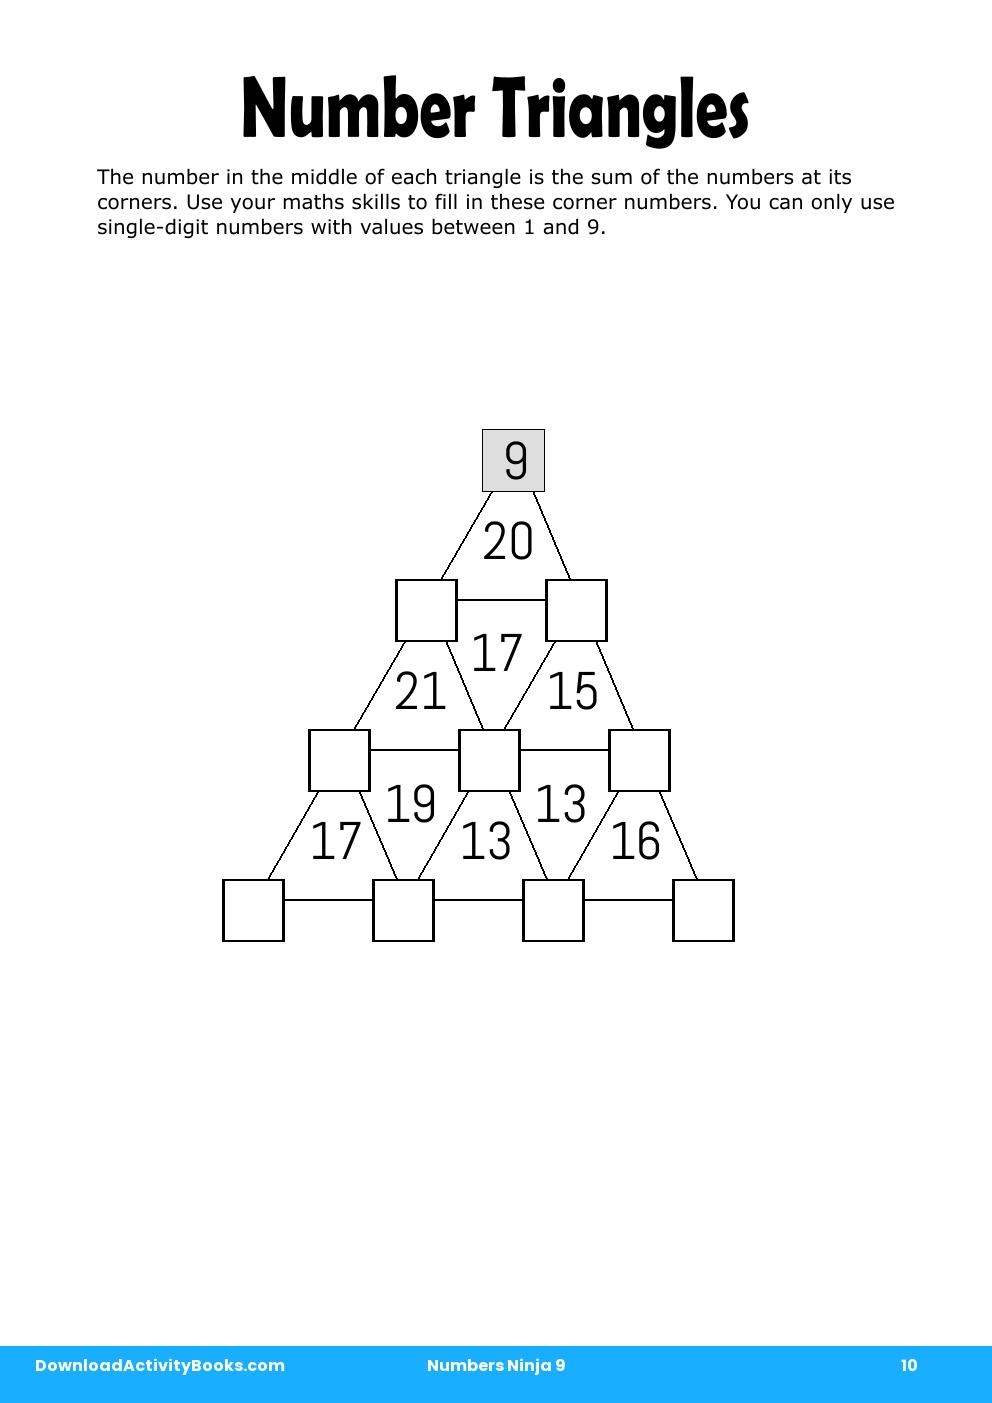 Number Triangles in Numbers Ninja 9